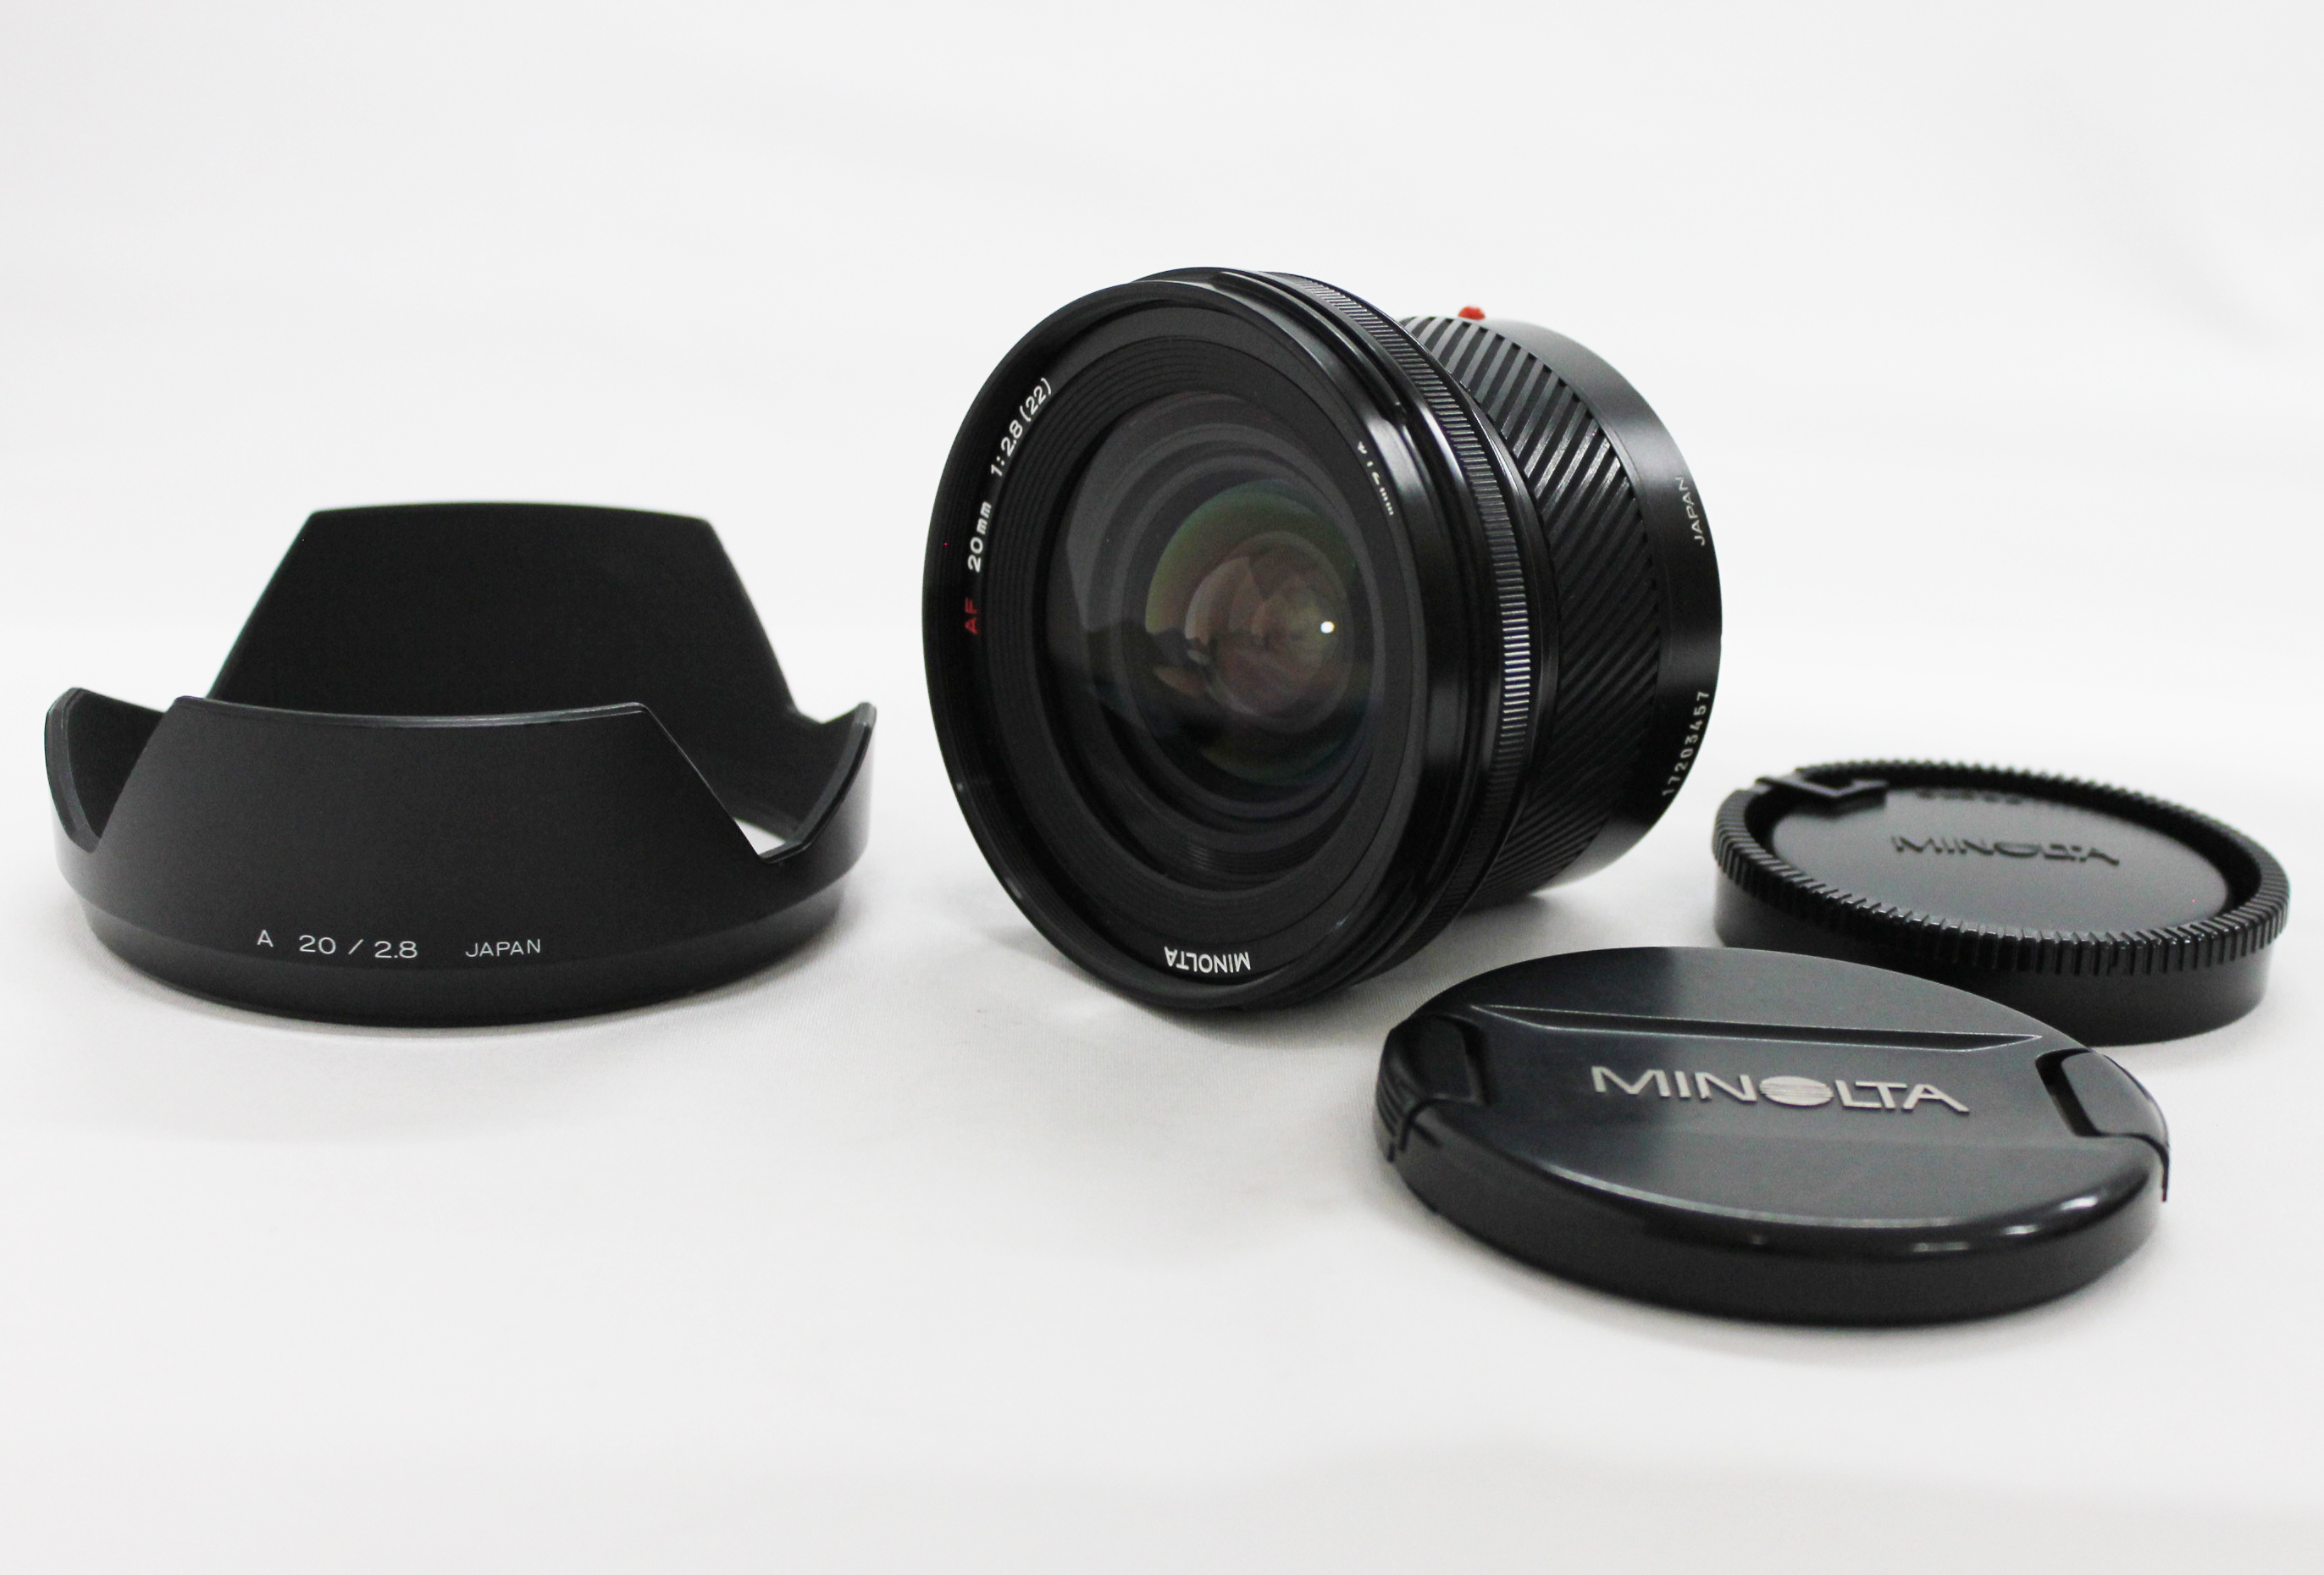 Japan Used Camera Shop | [Mint] Minolta AF 20mm F/2.8 Lens for Sony/Minolta A mount from Japan